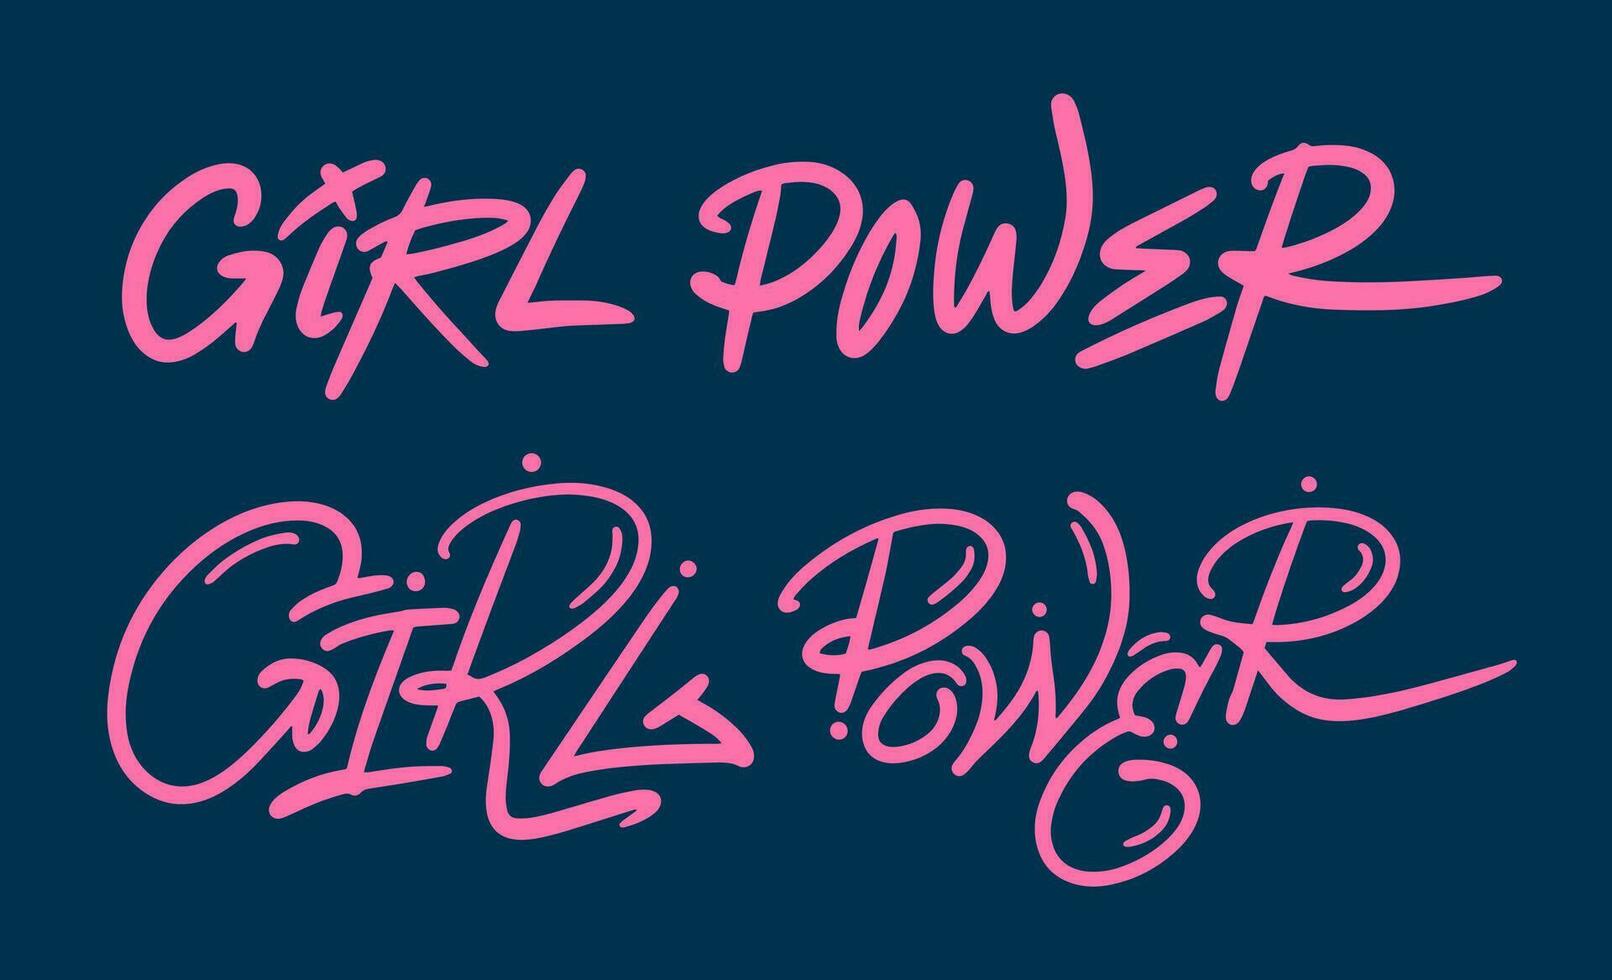 Retro inspirational girl power slogan print. Graffiti urban street style. Colorful cute calligraphy text illustration vector